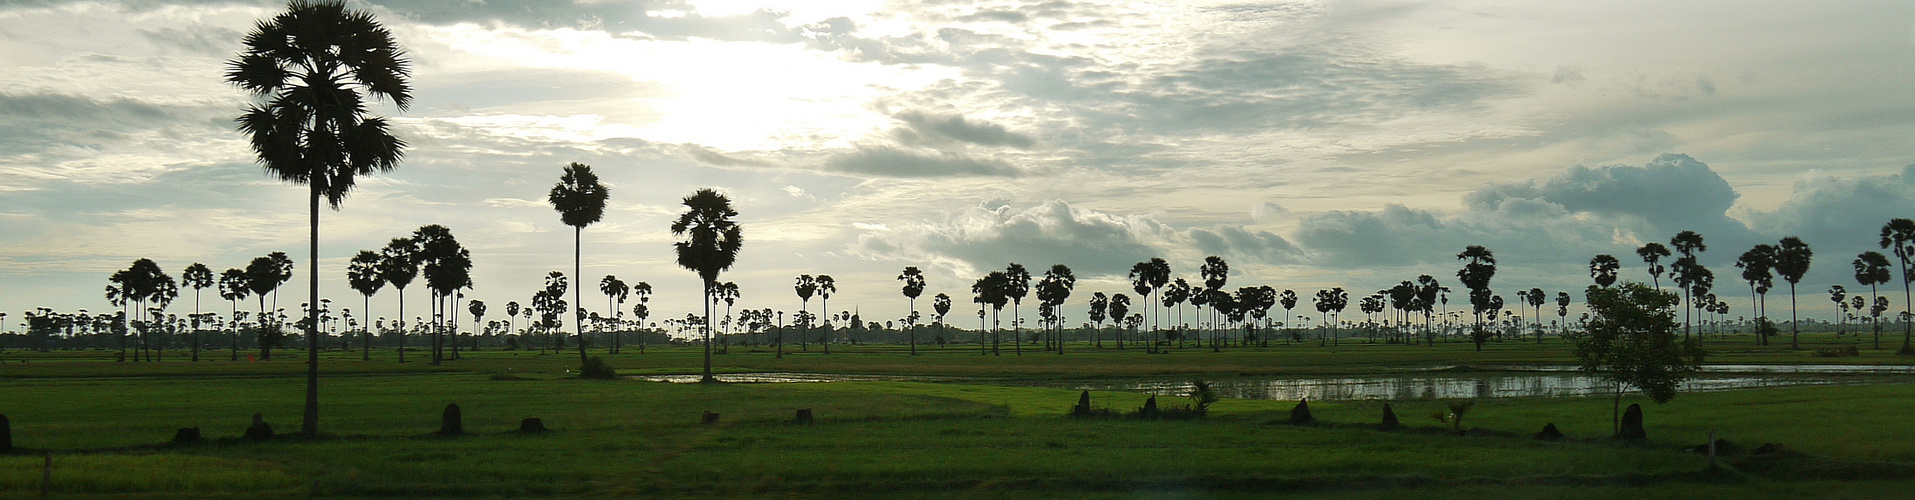 Palmen in Kambodscha